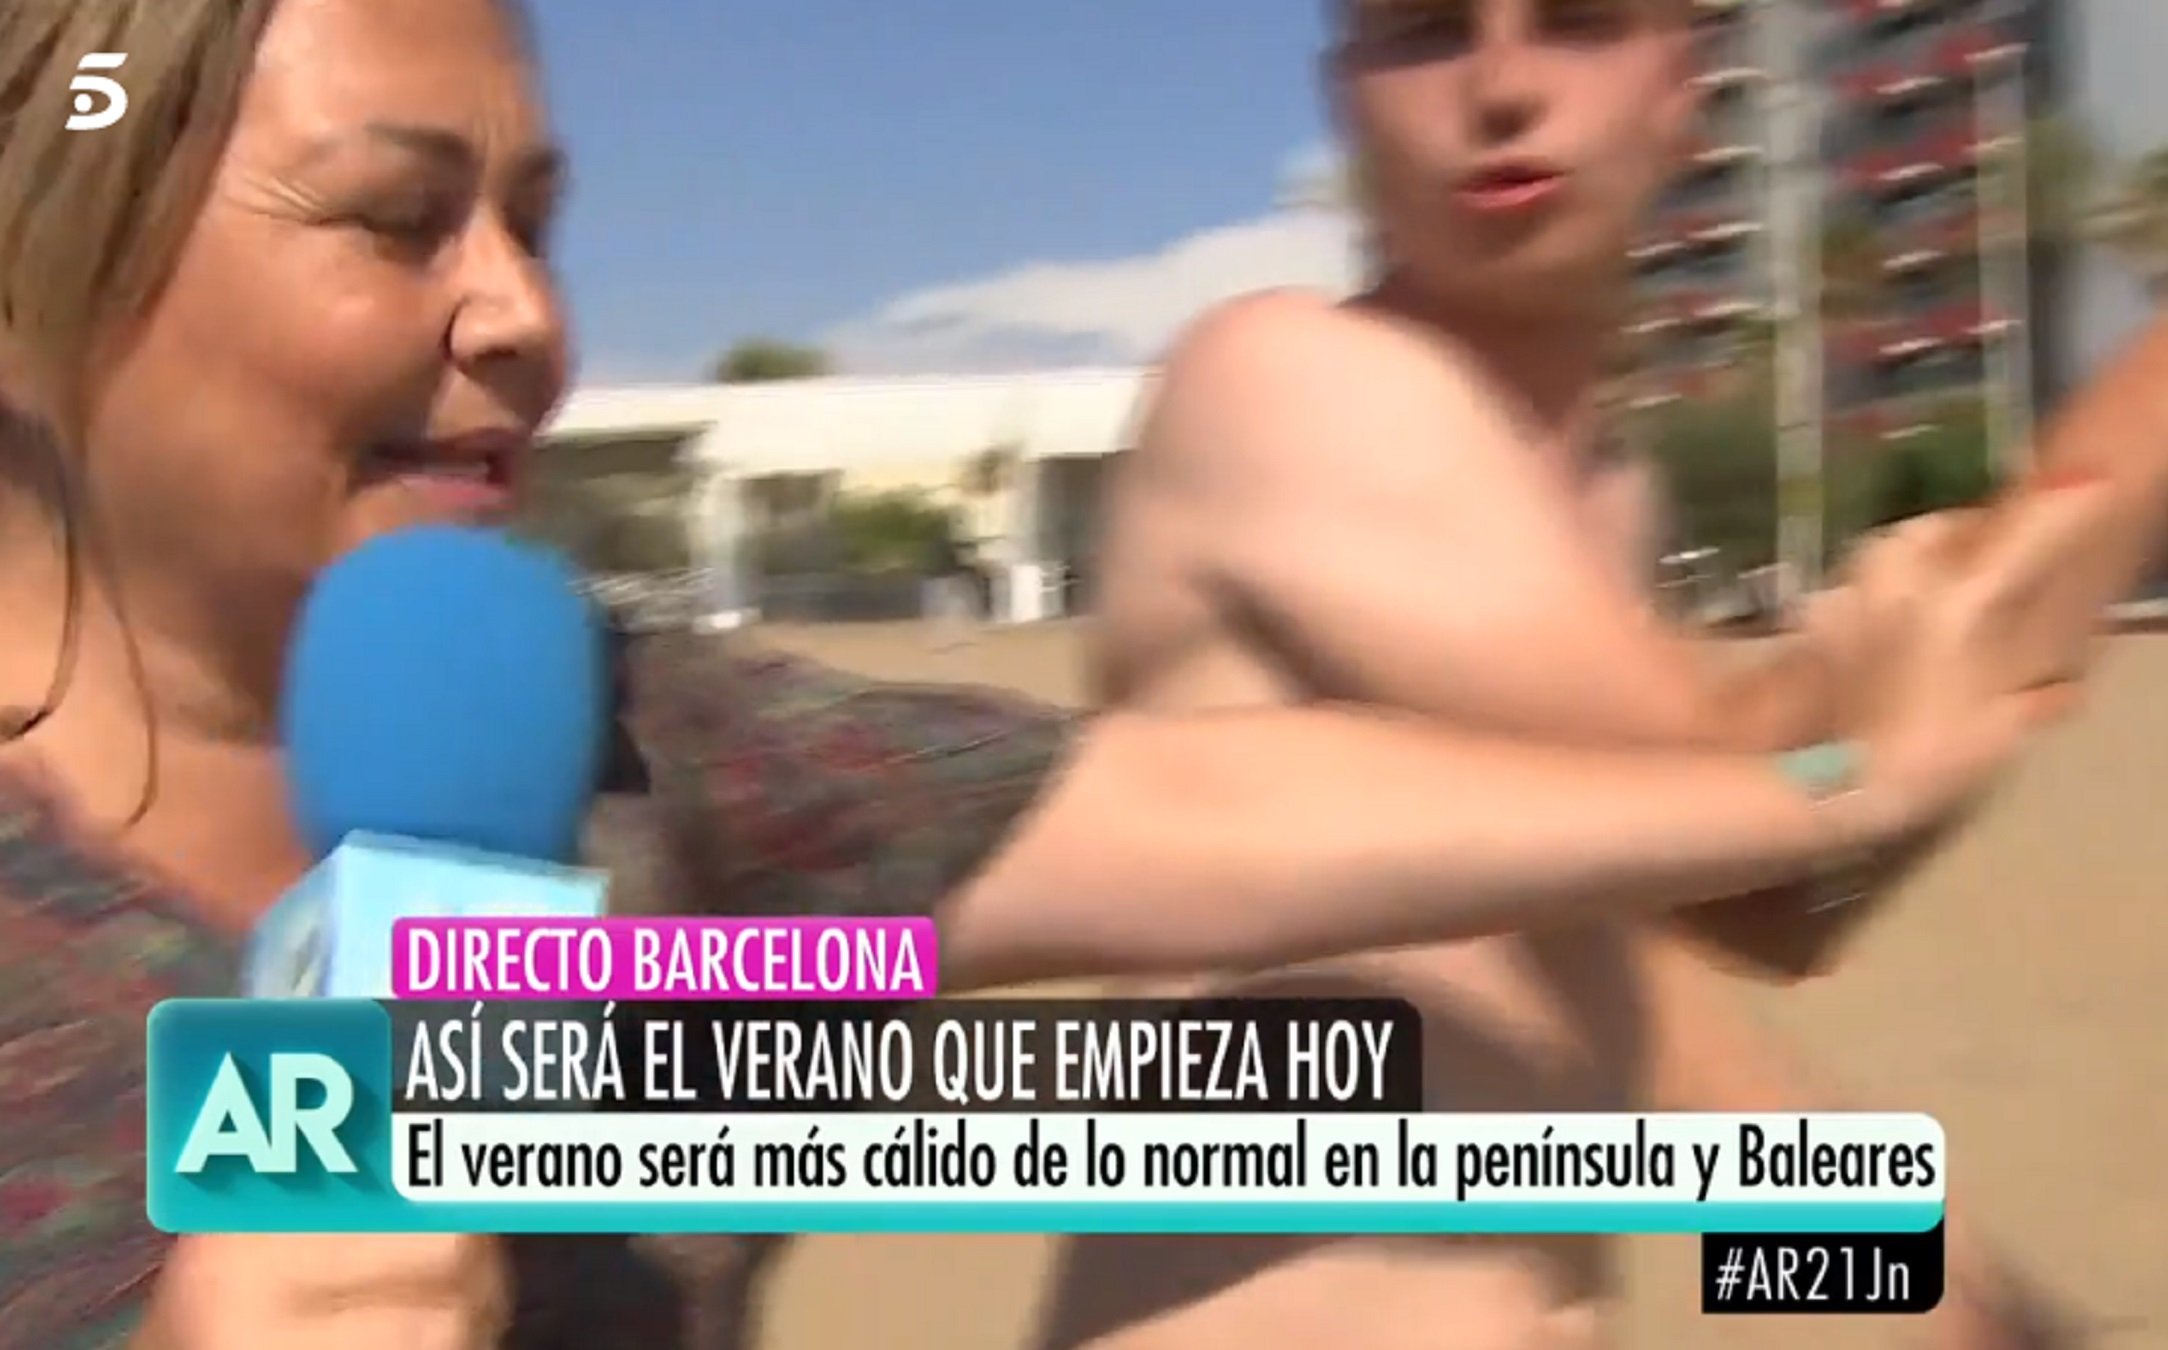 Encontronazo de Mayka Navarro con un bañista en Barcelona: "A ver, chavalito..."